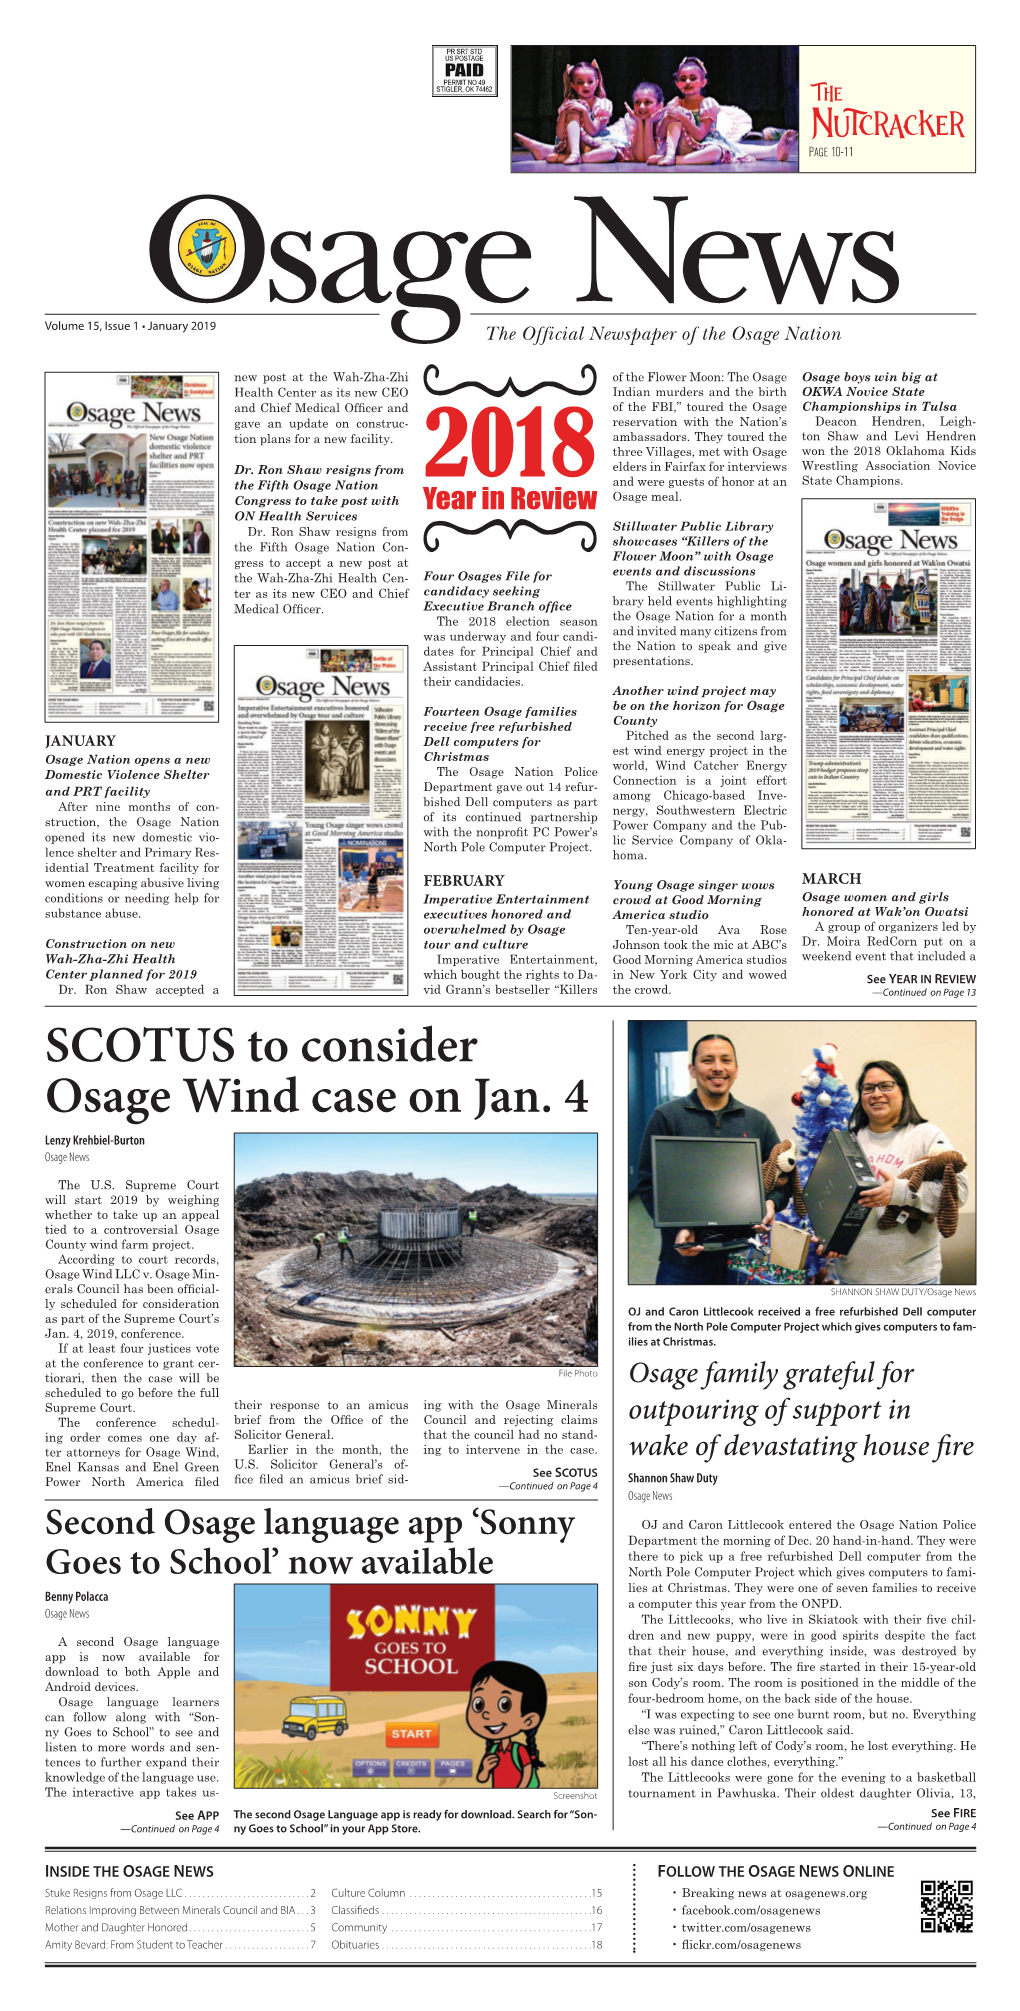 SCOTUS to Consider Osage Wind Case on Jan. 4 Lenzy Krehbiel-Burton Osage News